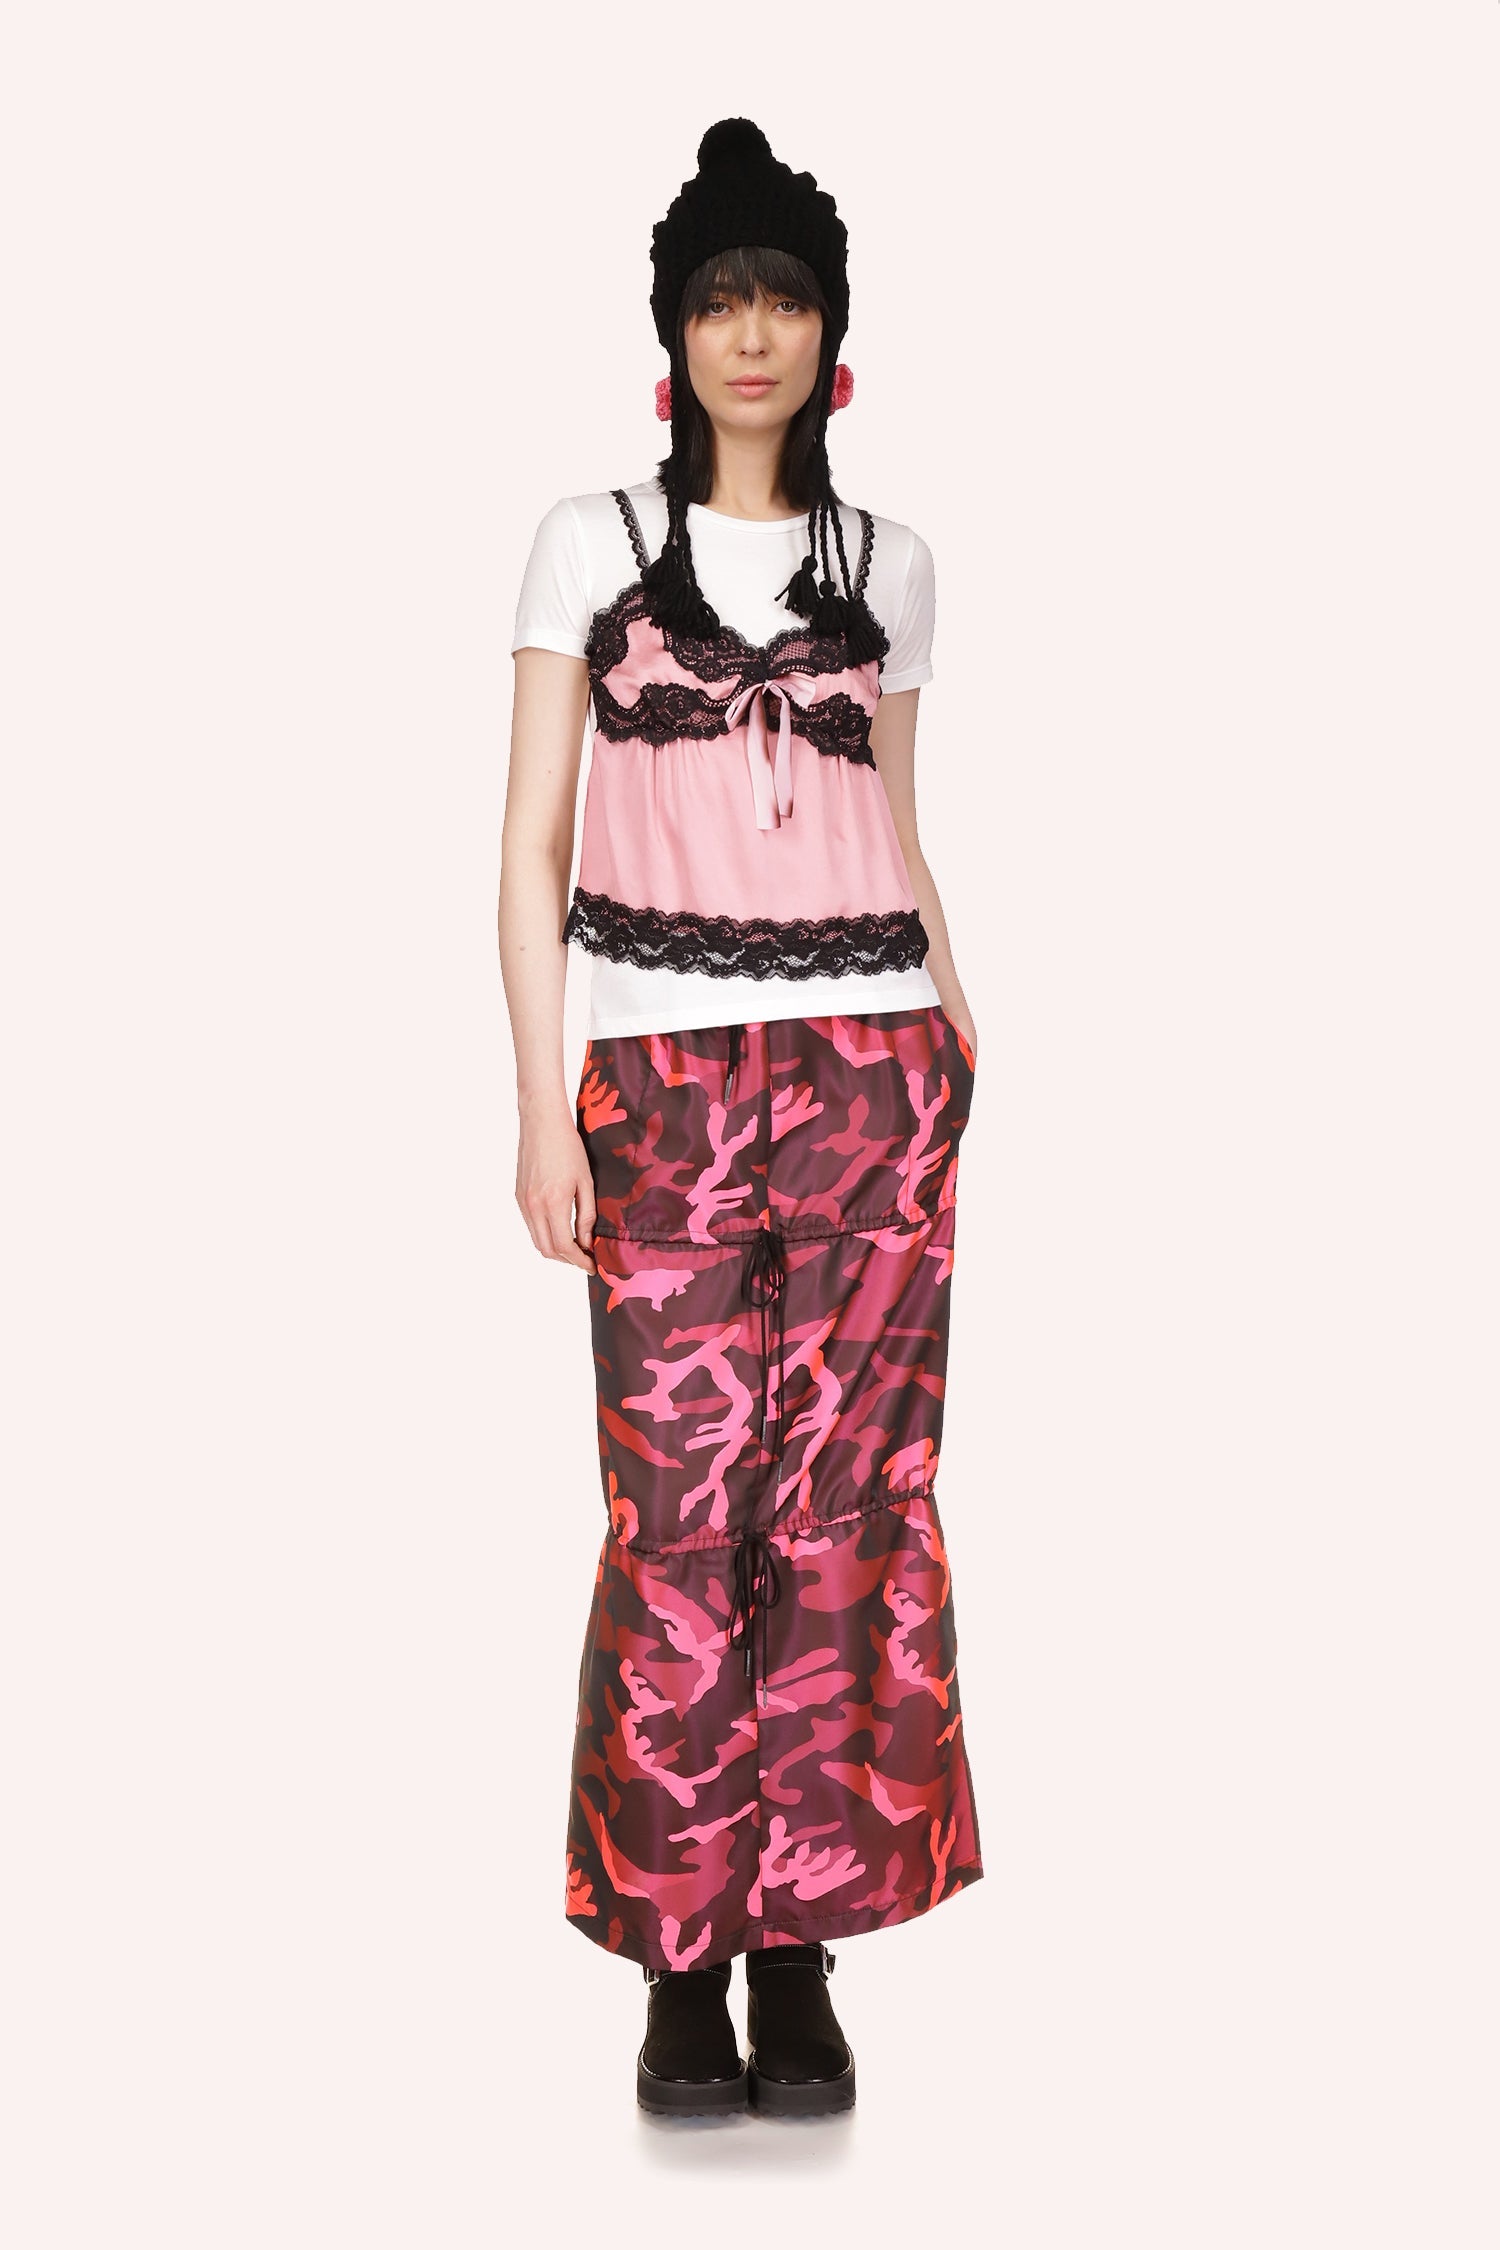 Camouflage skirt, hue of pink, 3 levels, side pocket, 2-lace adjust, cut on each side, ankles-long